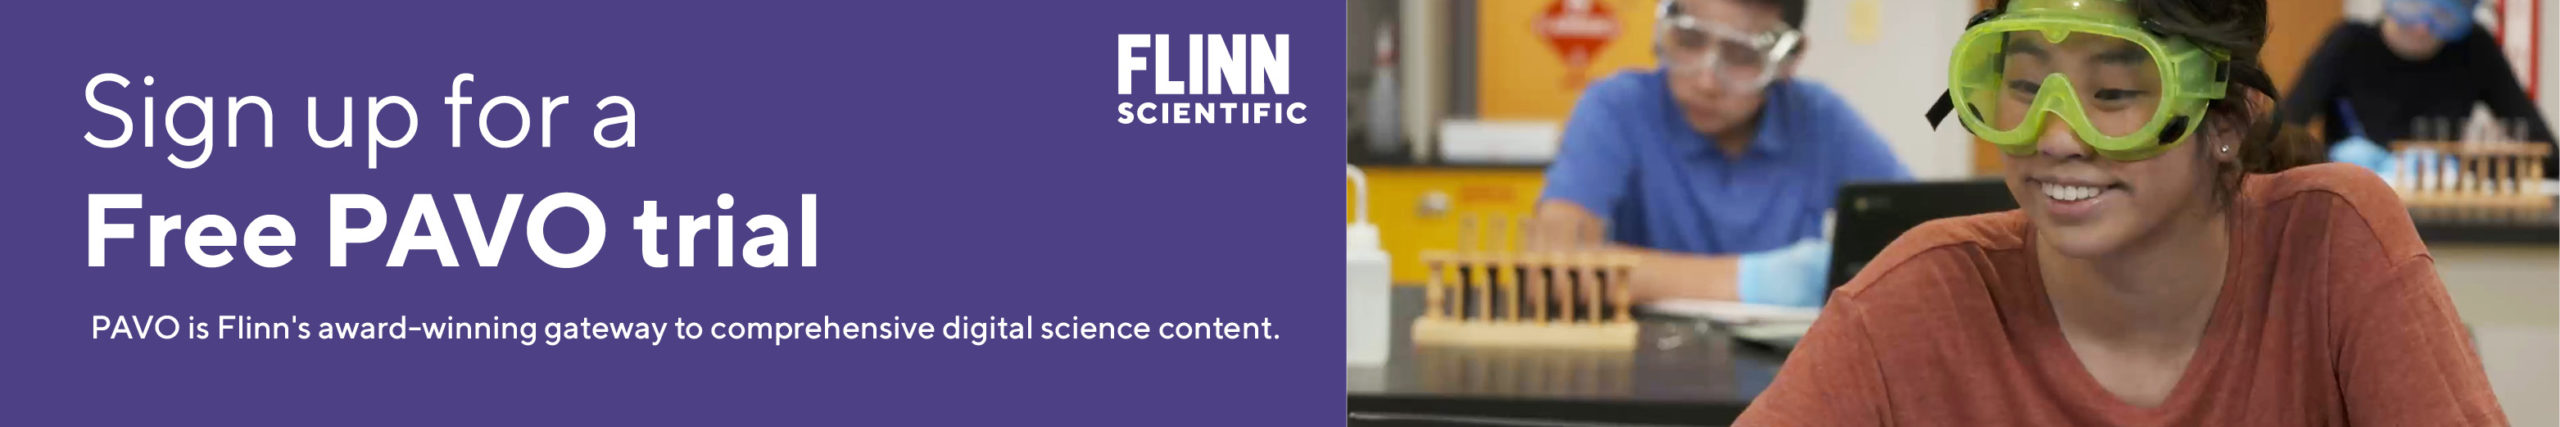 Flinn Scientific